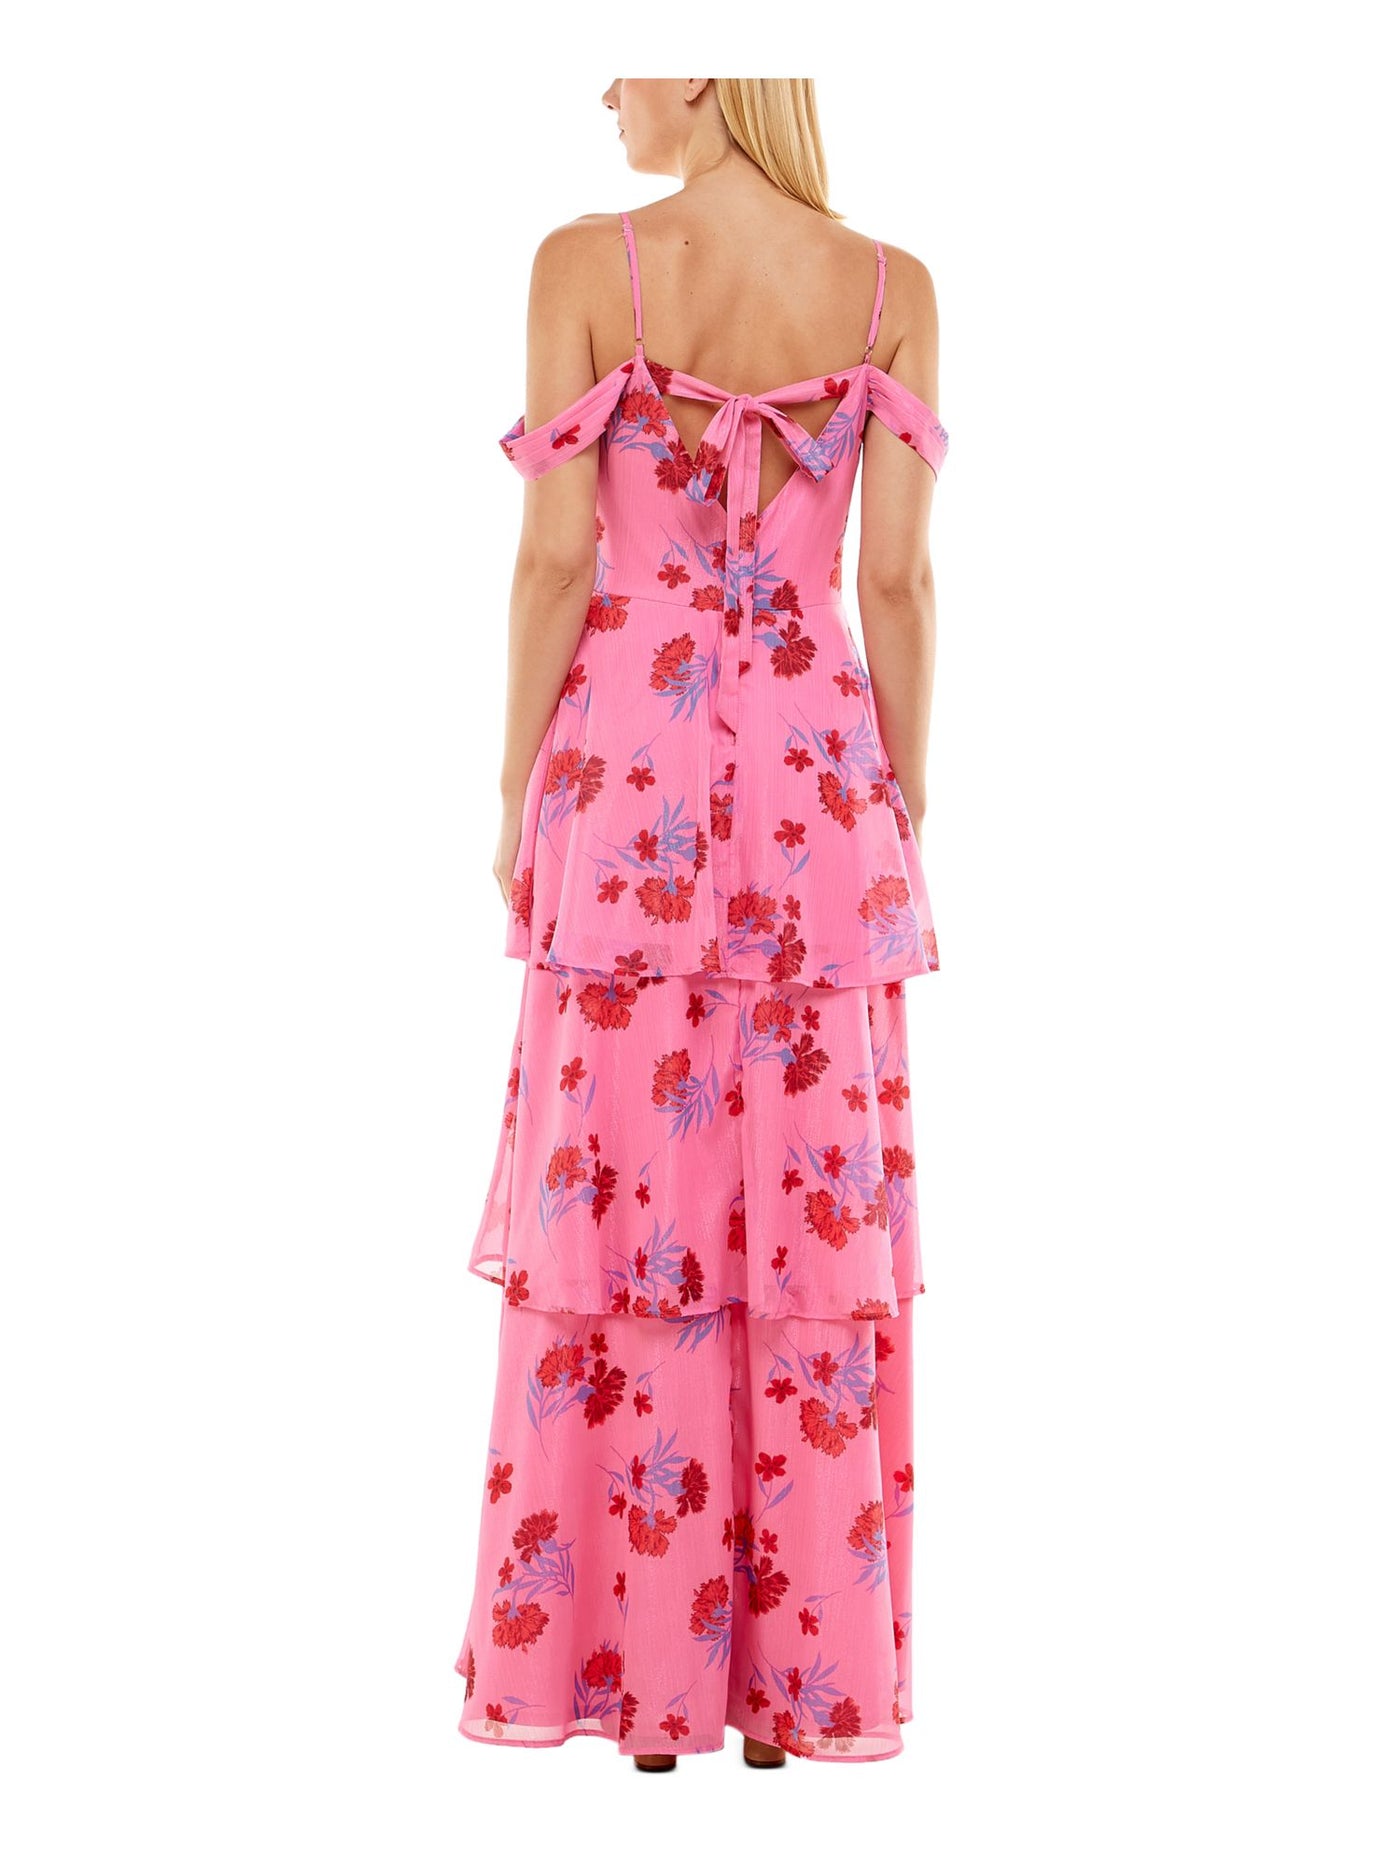 CRYSTAL DOLLS Womens Pink Cold Shoulder Zippered Adjustable Straps Tiered Floral Sleeveless V Neck Maxi Cocktail Dress Juniors 9